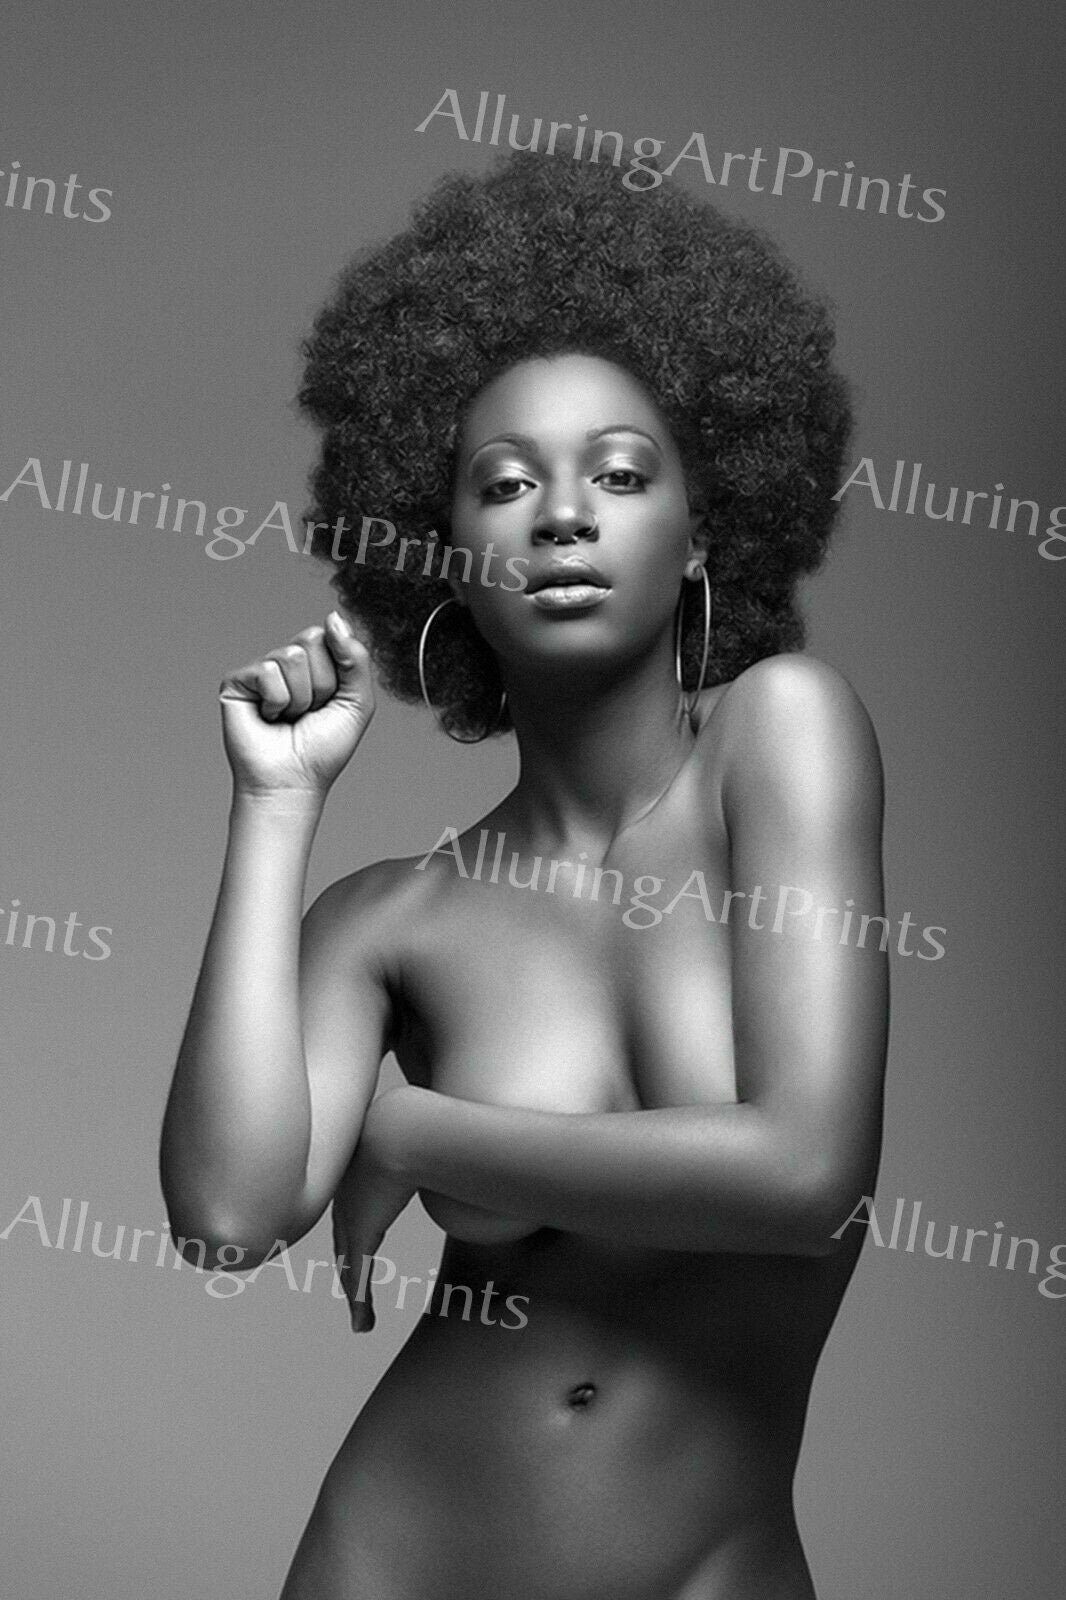 Nude Print Black Model Pretty Woman Busty Big Boobs Petite alfro Fine Wall Art black white -A584